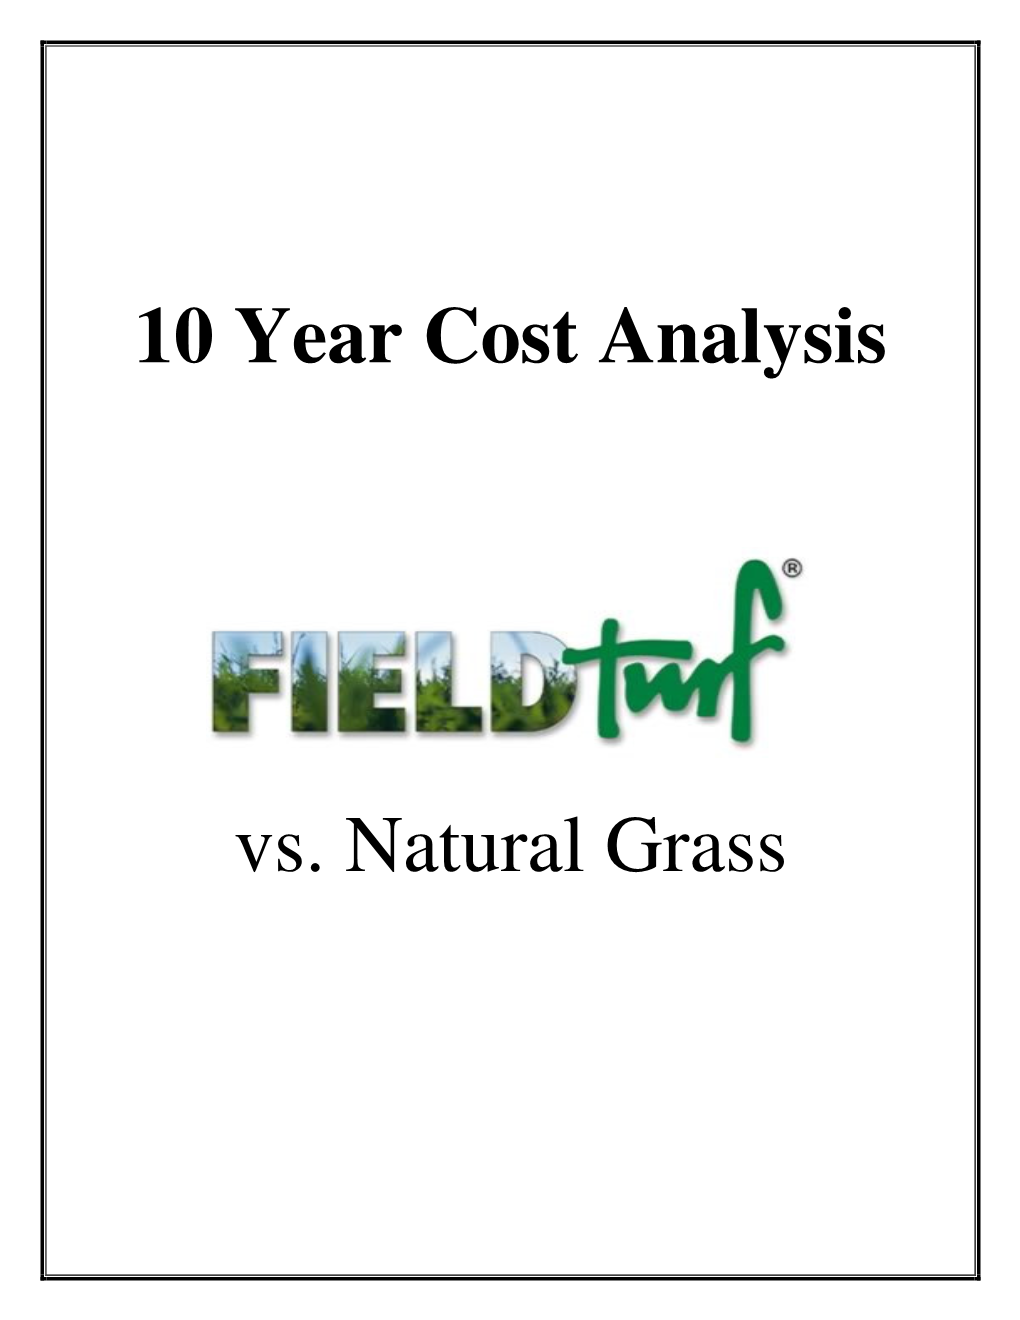 Turf Vs. Natural Grass-Cost Analysis